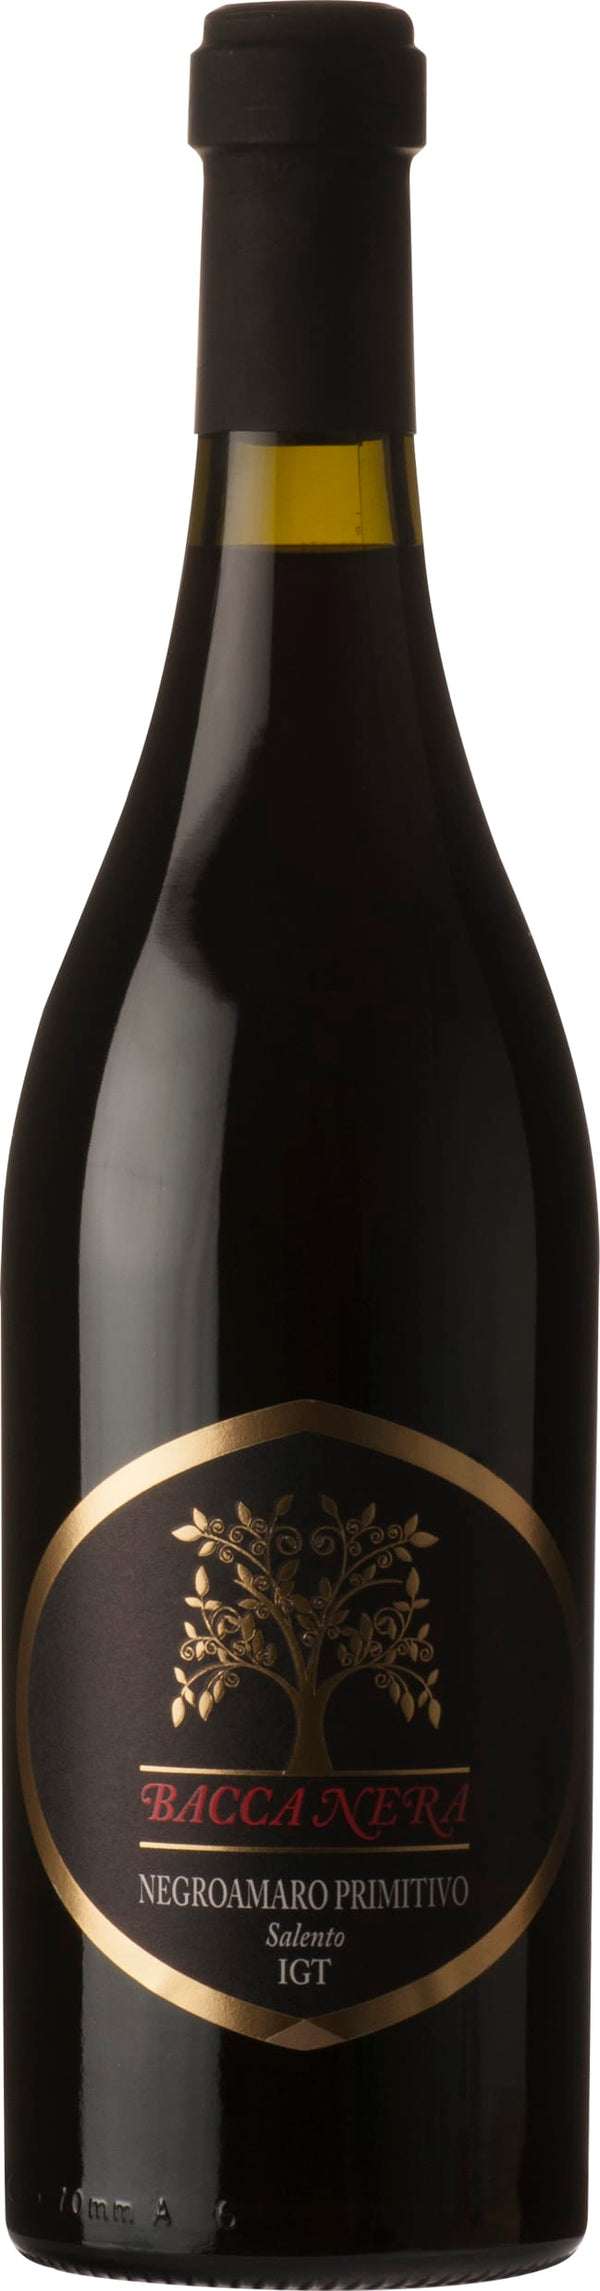 Bacca Nera Negroamaro Primitivo IGT Salento 2021 6x75cl - Just Wines 